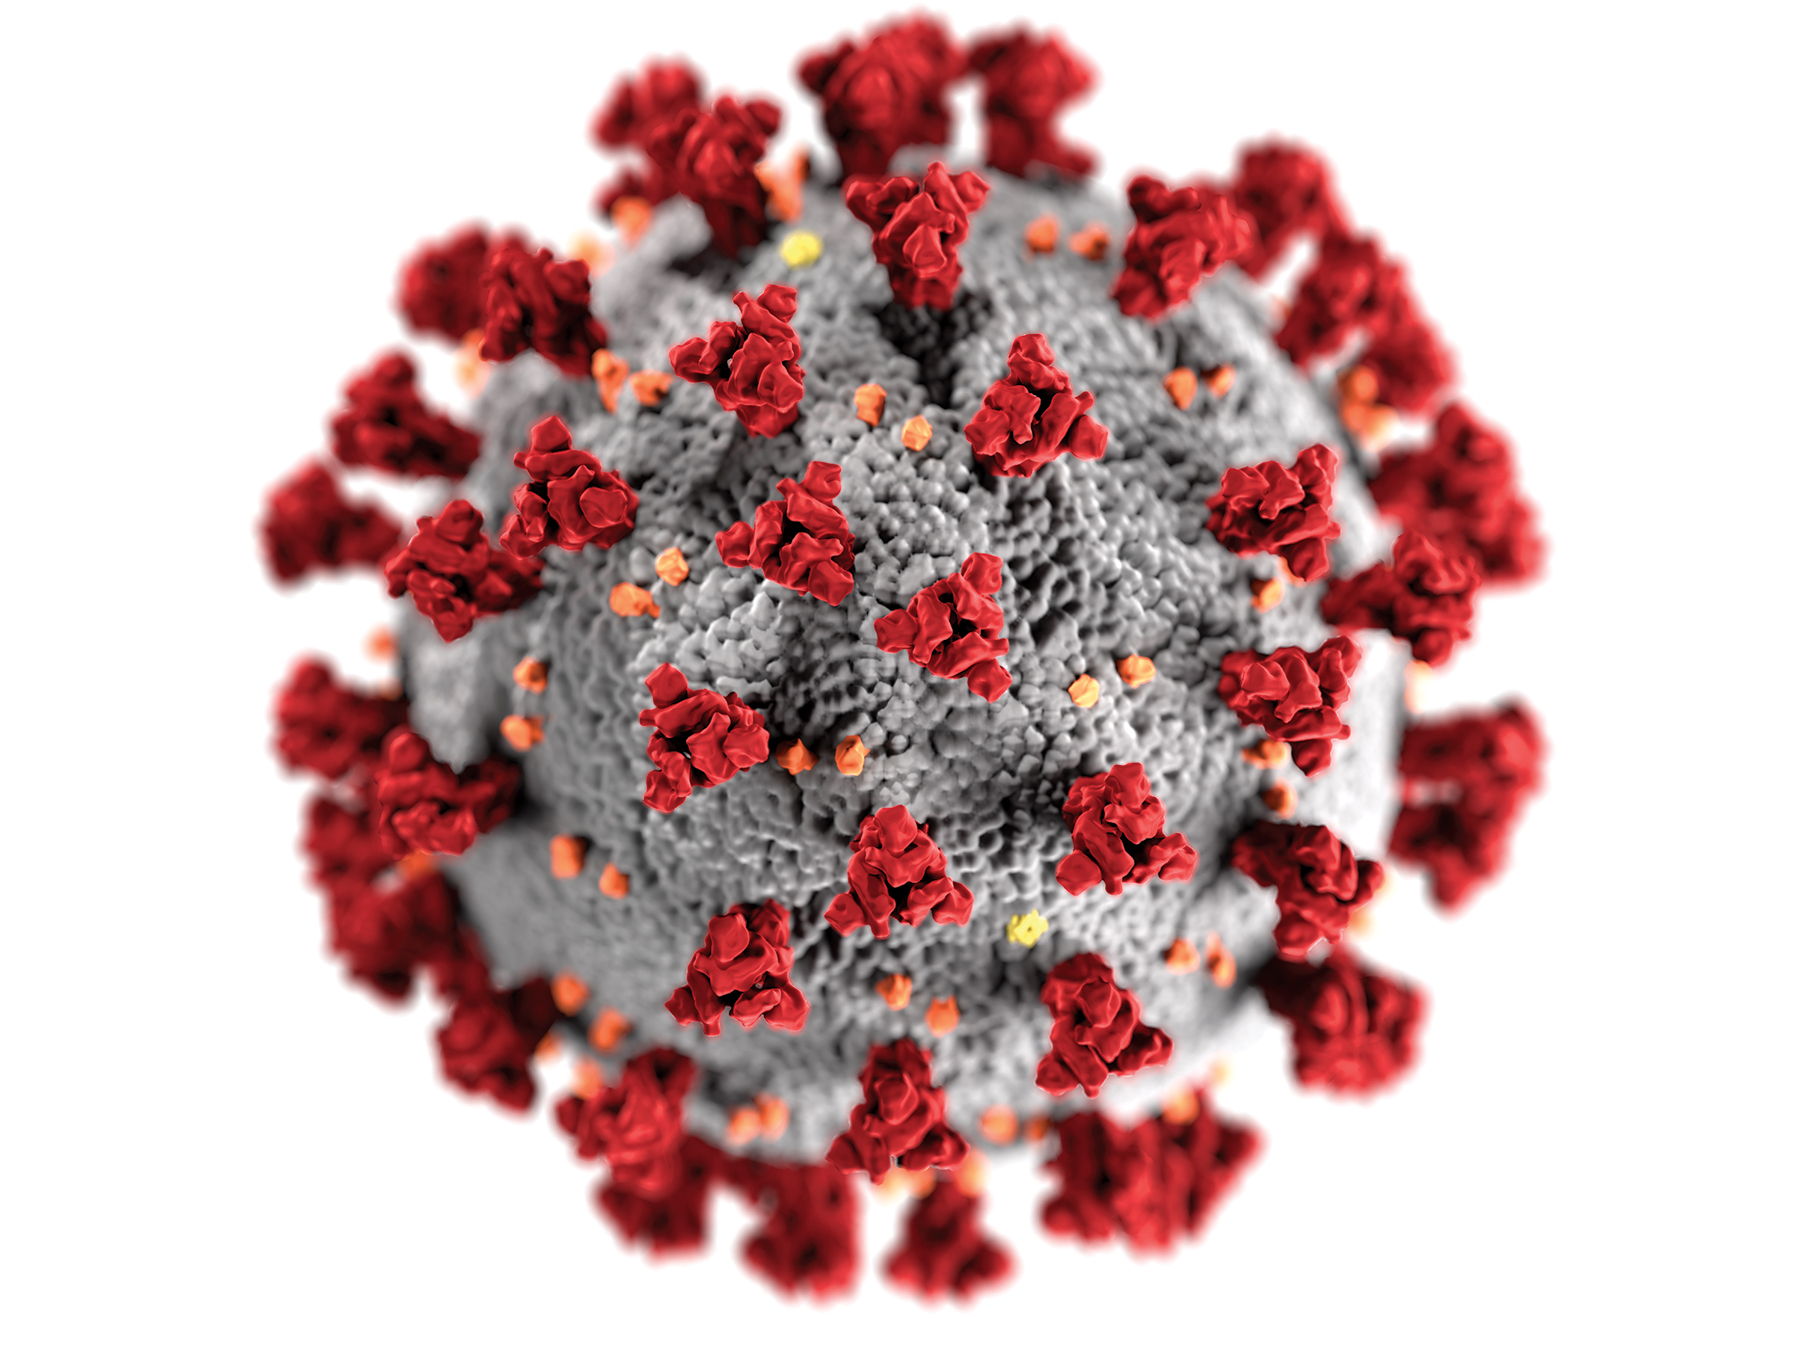 COVID-19 virus. Image credit: Alissa Eckert and Dan Higgins/CDC. (Click image to download hi-res version)